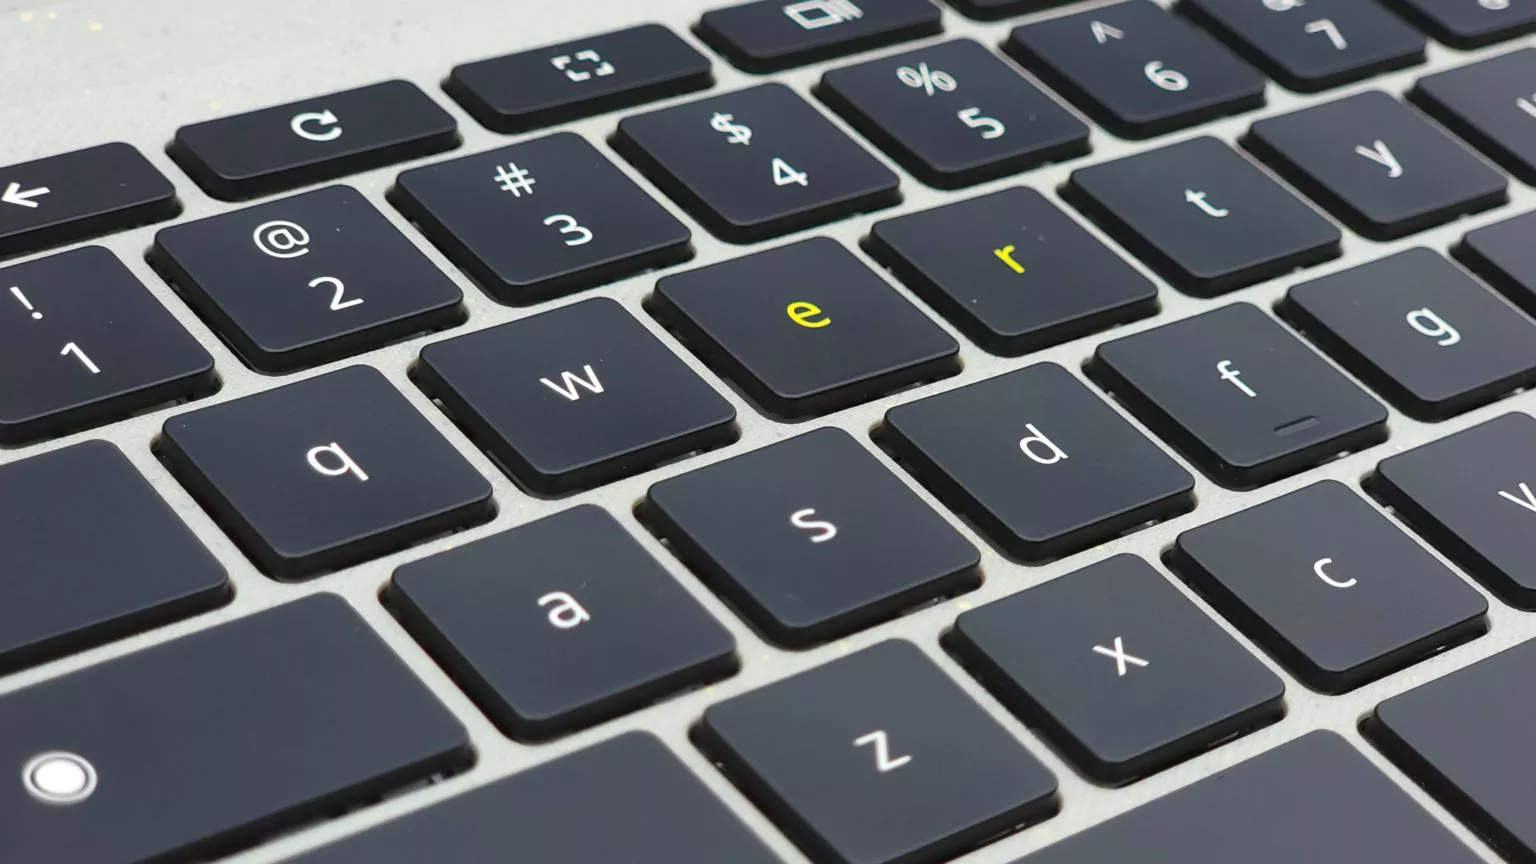 Acer Chromebook Vero 514 Keyboard Closeup 1536w 864h.jpg - نگاهی به کروم بوک ساخته شده از مواد بازیافتی ایسر Vero 514